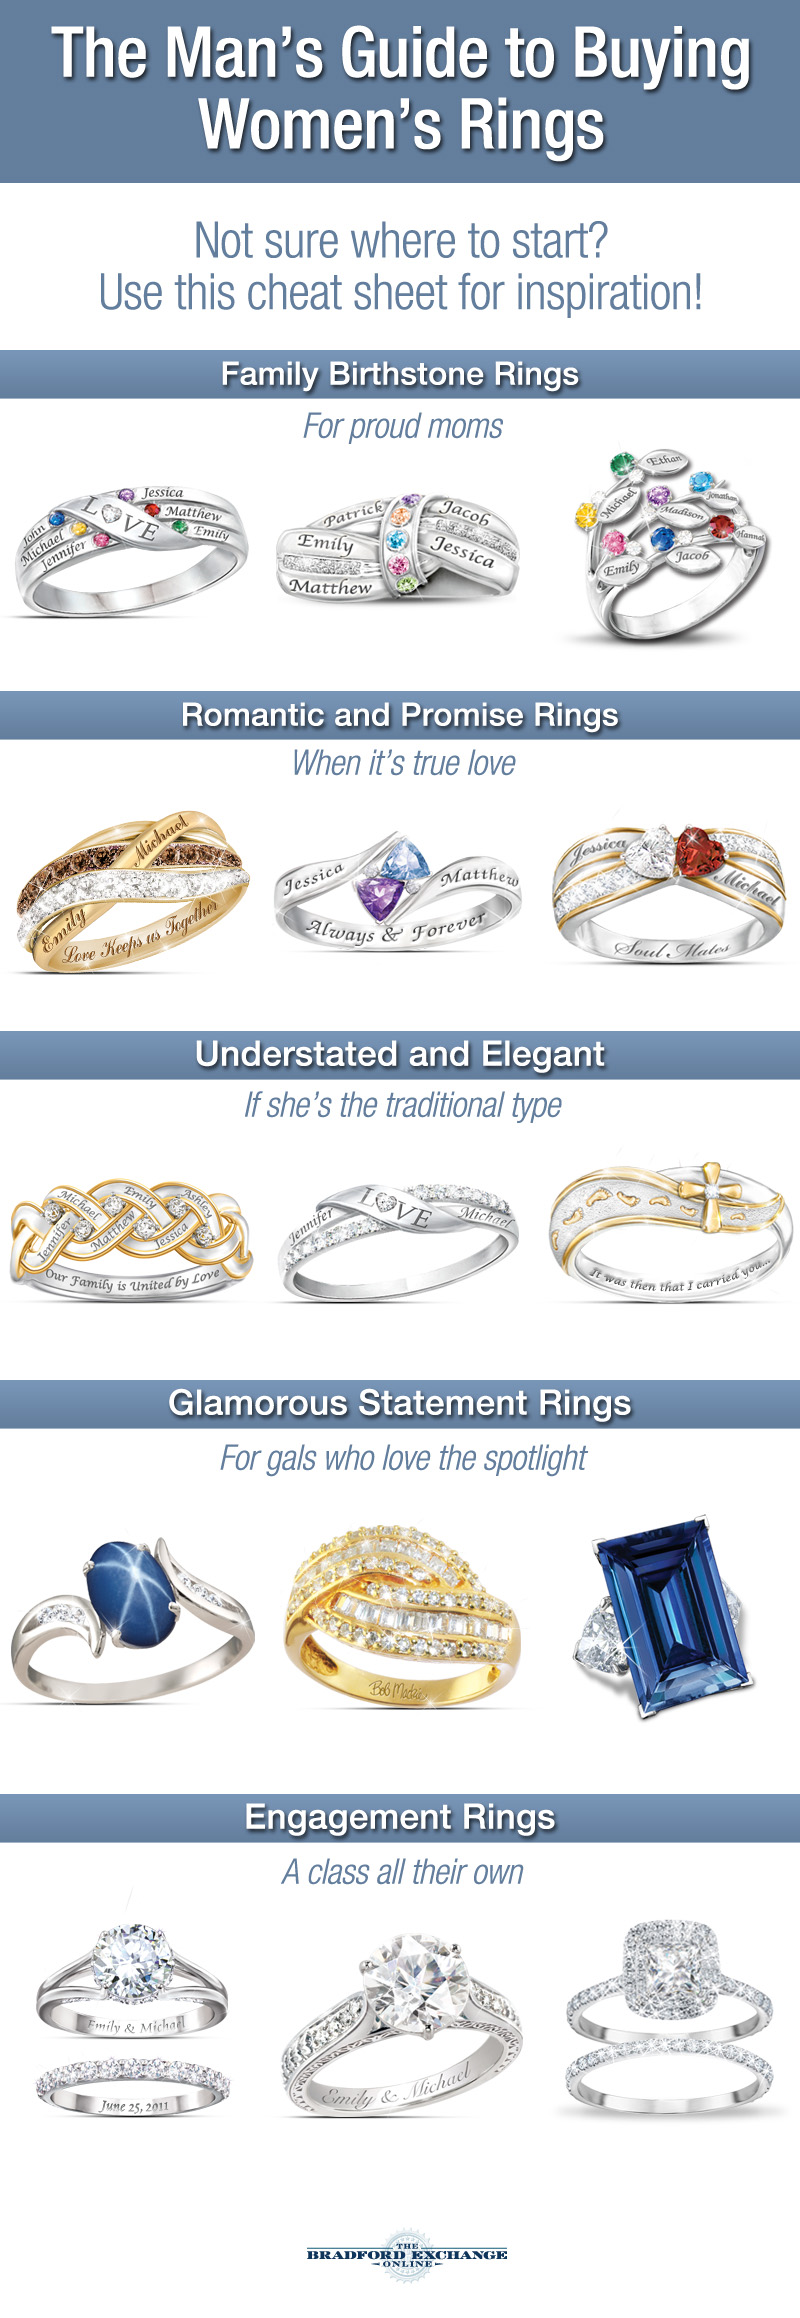 The Man's Guide to Buying Women's Rings - Bradford Exchange Blog